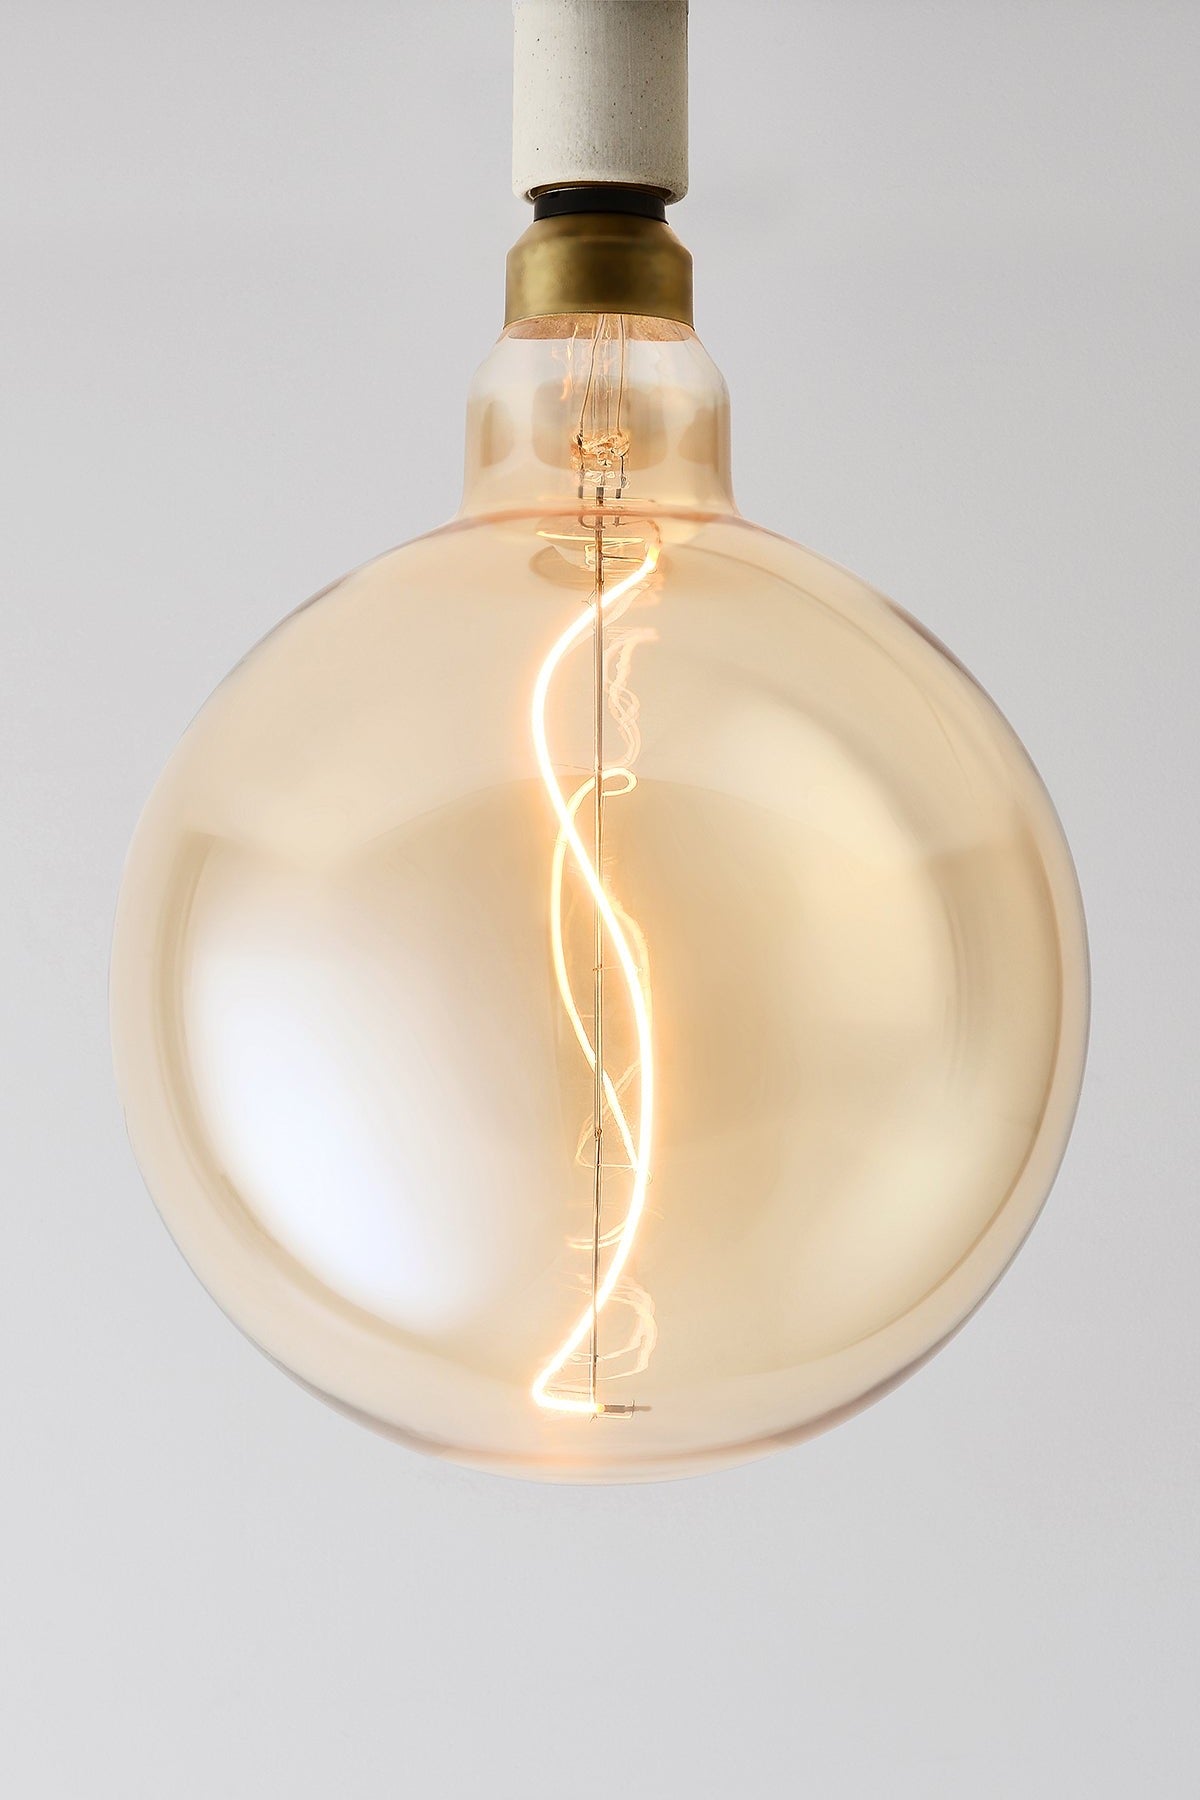 Modern globe LED light bulb with warm vintage Edison style glow